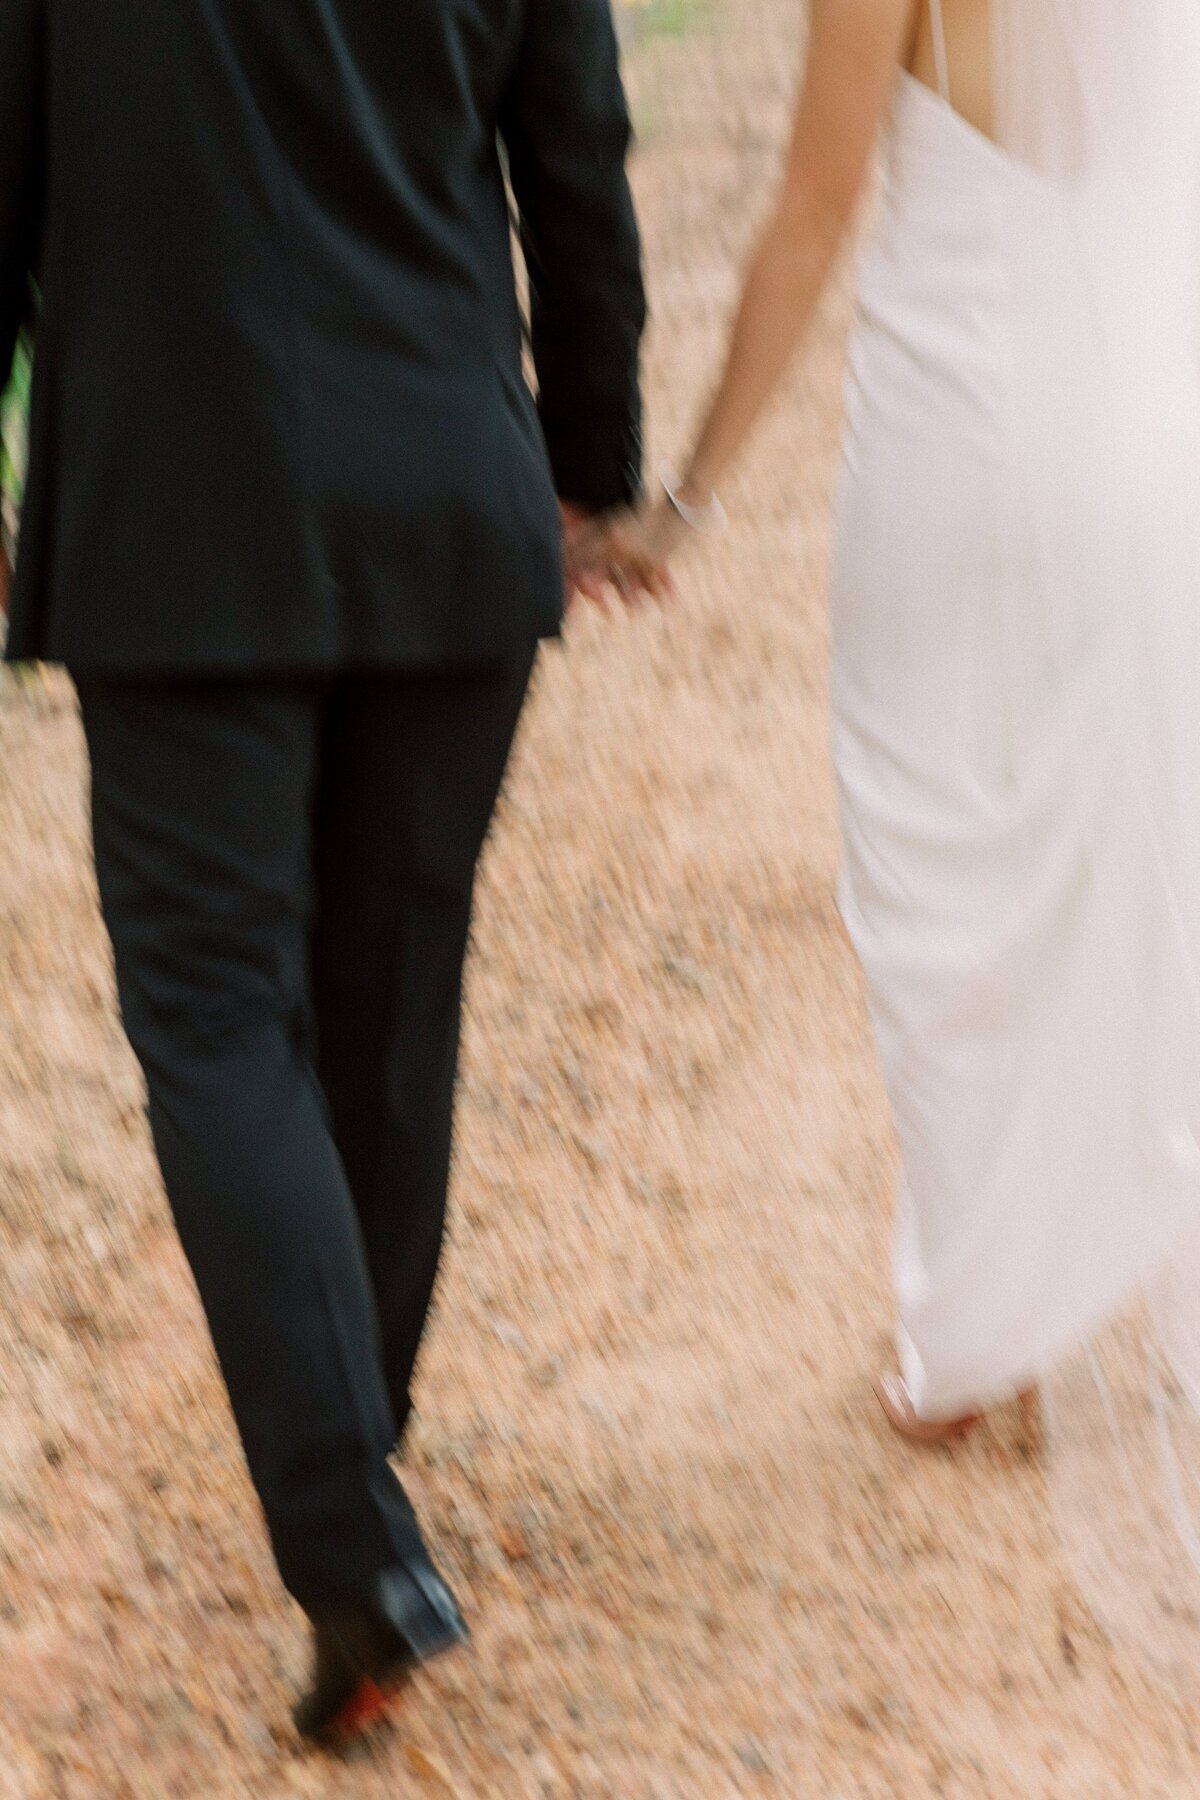 Bride and groom walk away holding hands